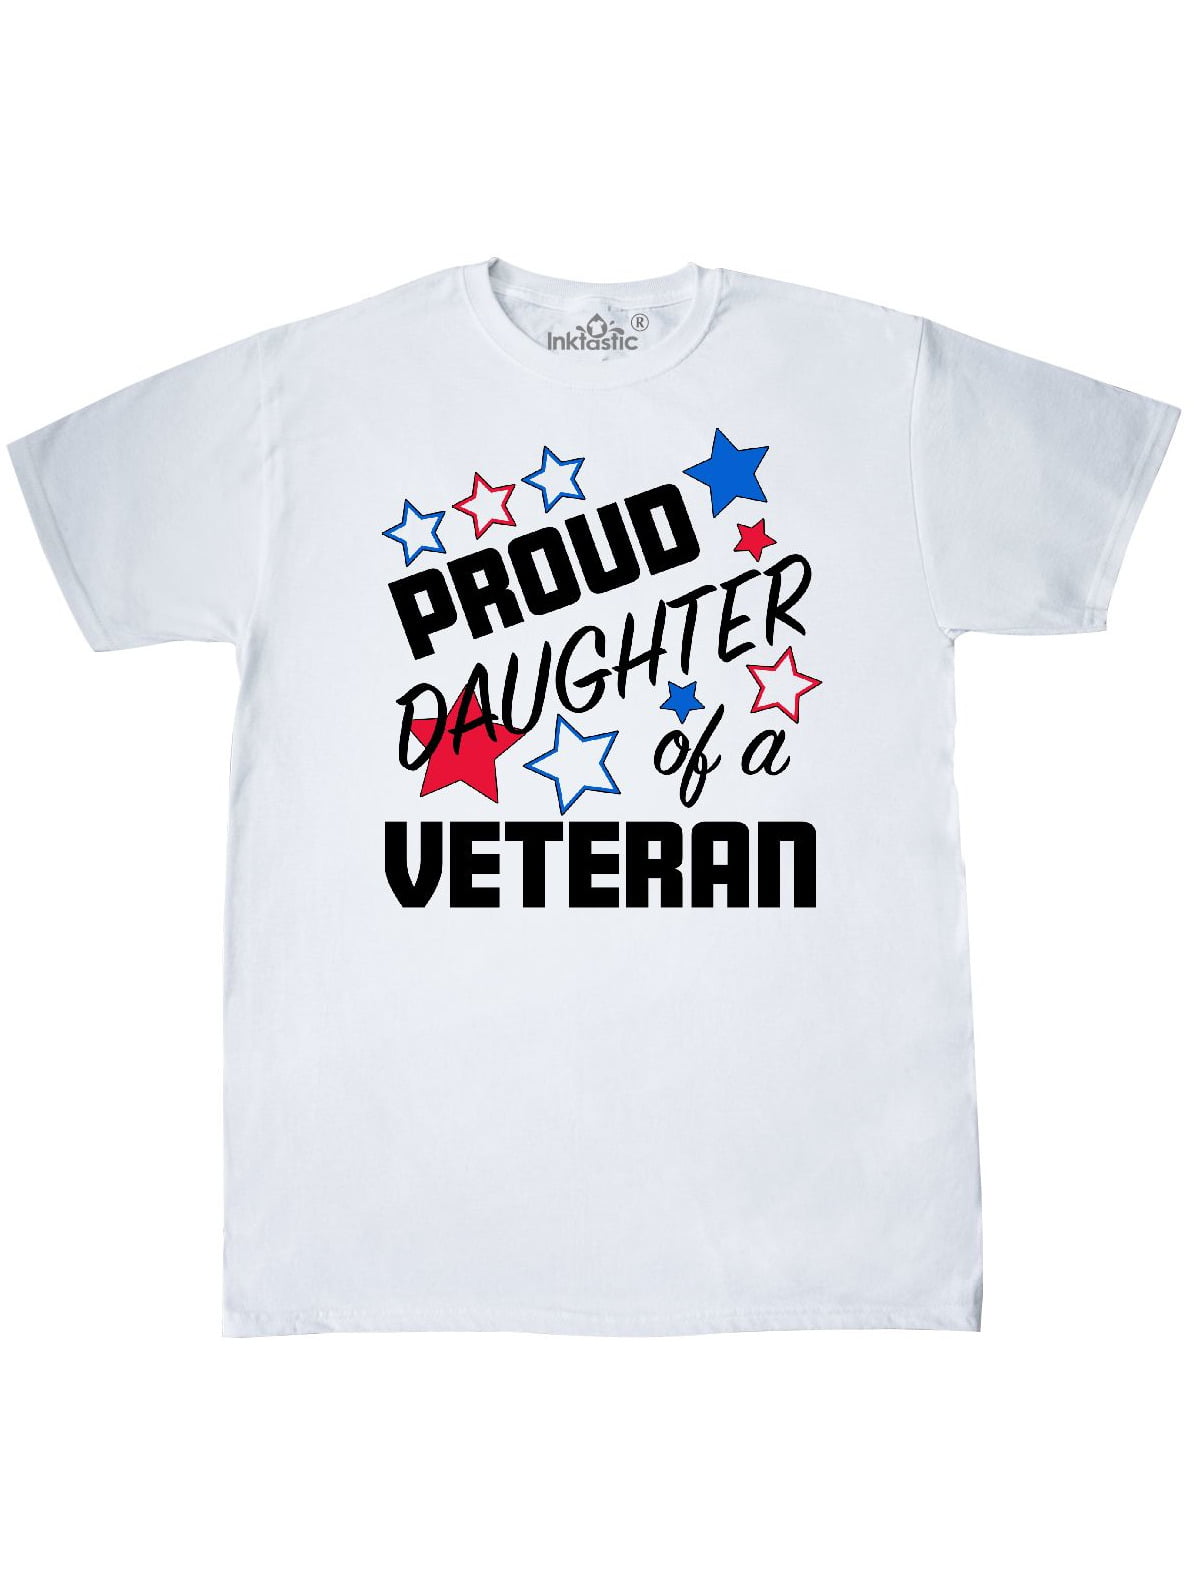 veterans day nfl shirts